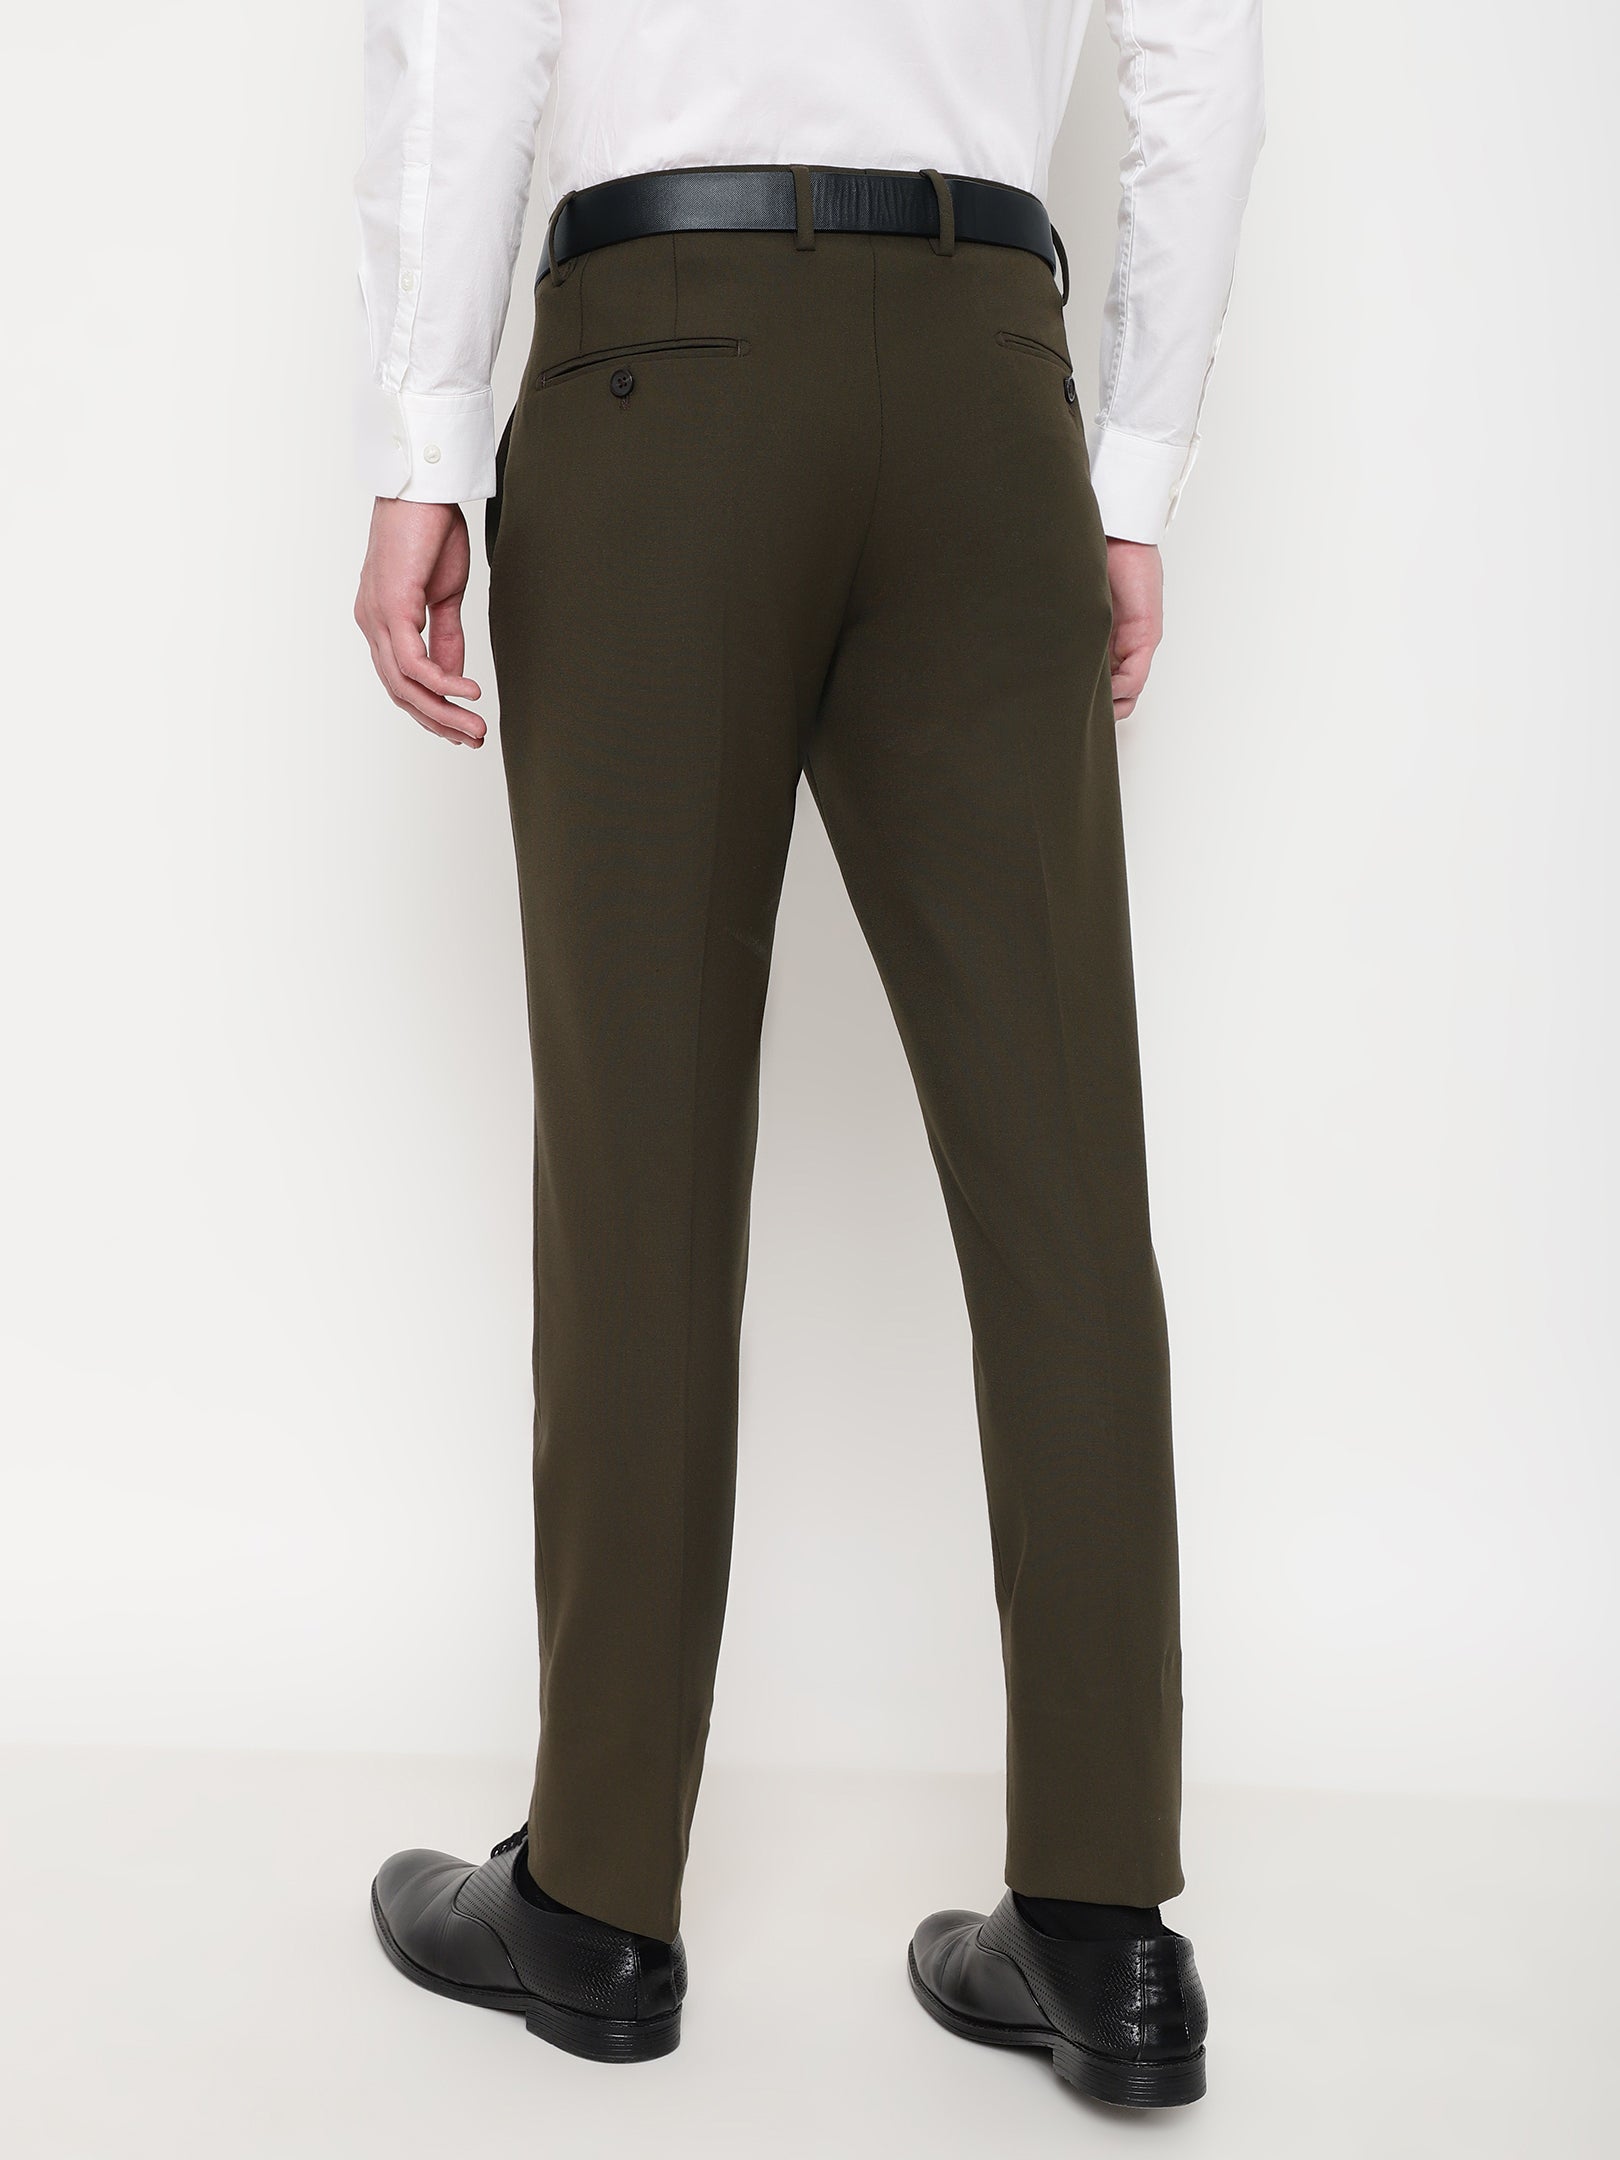 Men's Spring Autumn Fashion Business Casual Long Pants Suit Pants Male  Elastic Straight Formal Trousers Plus Big Size 28-40 - AliExpress